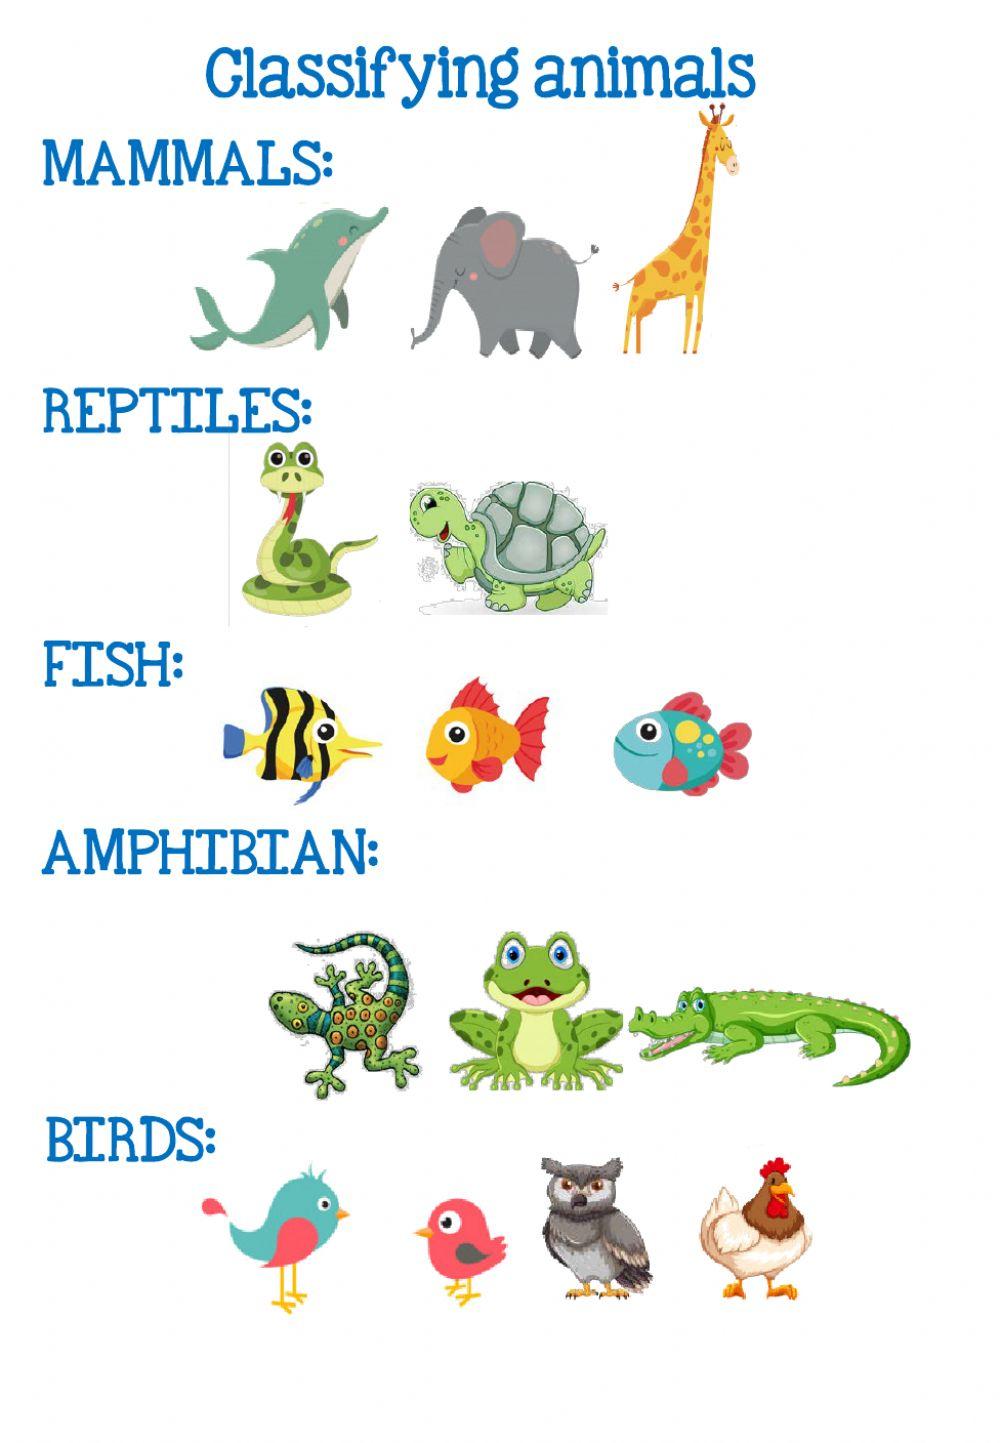 Classifying animals